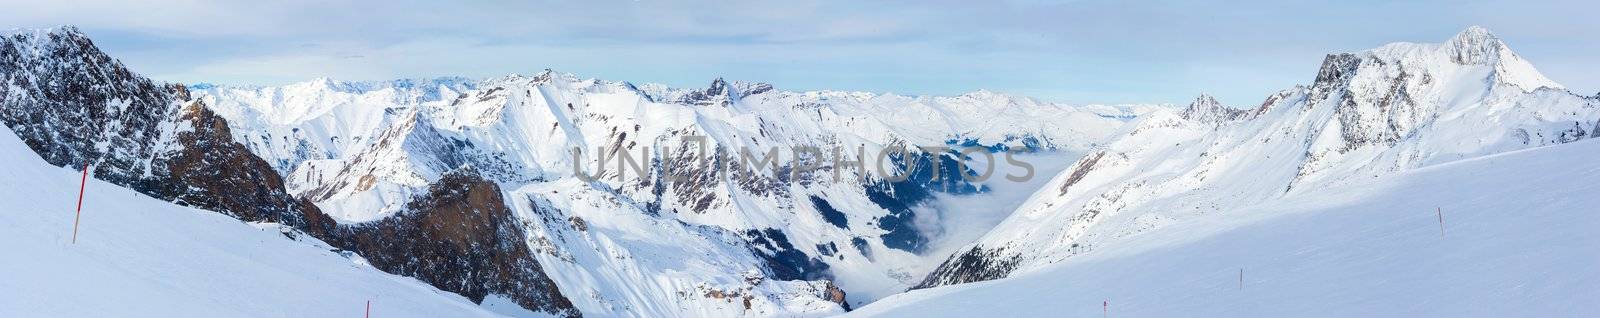 Skiing resort in Austria by maxoliki